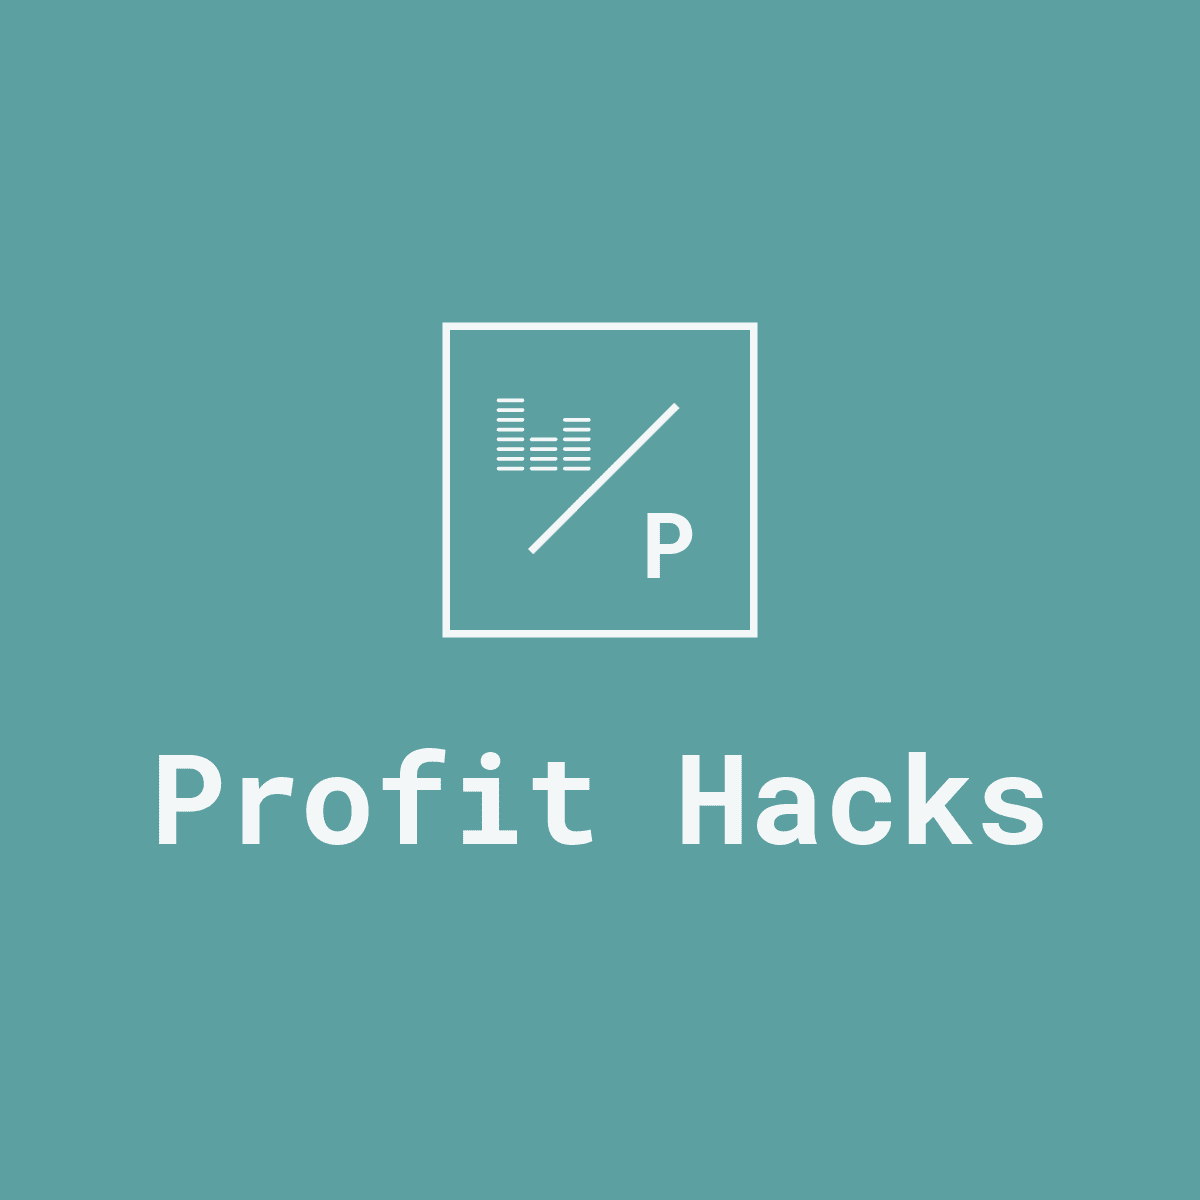 Profit Hacks